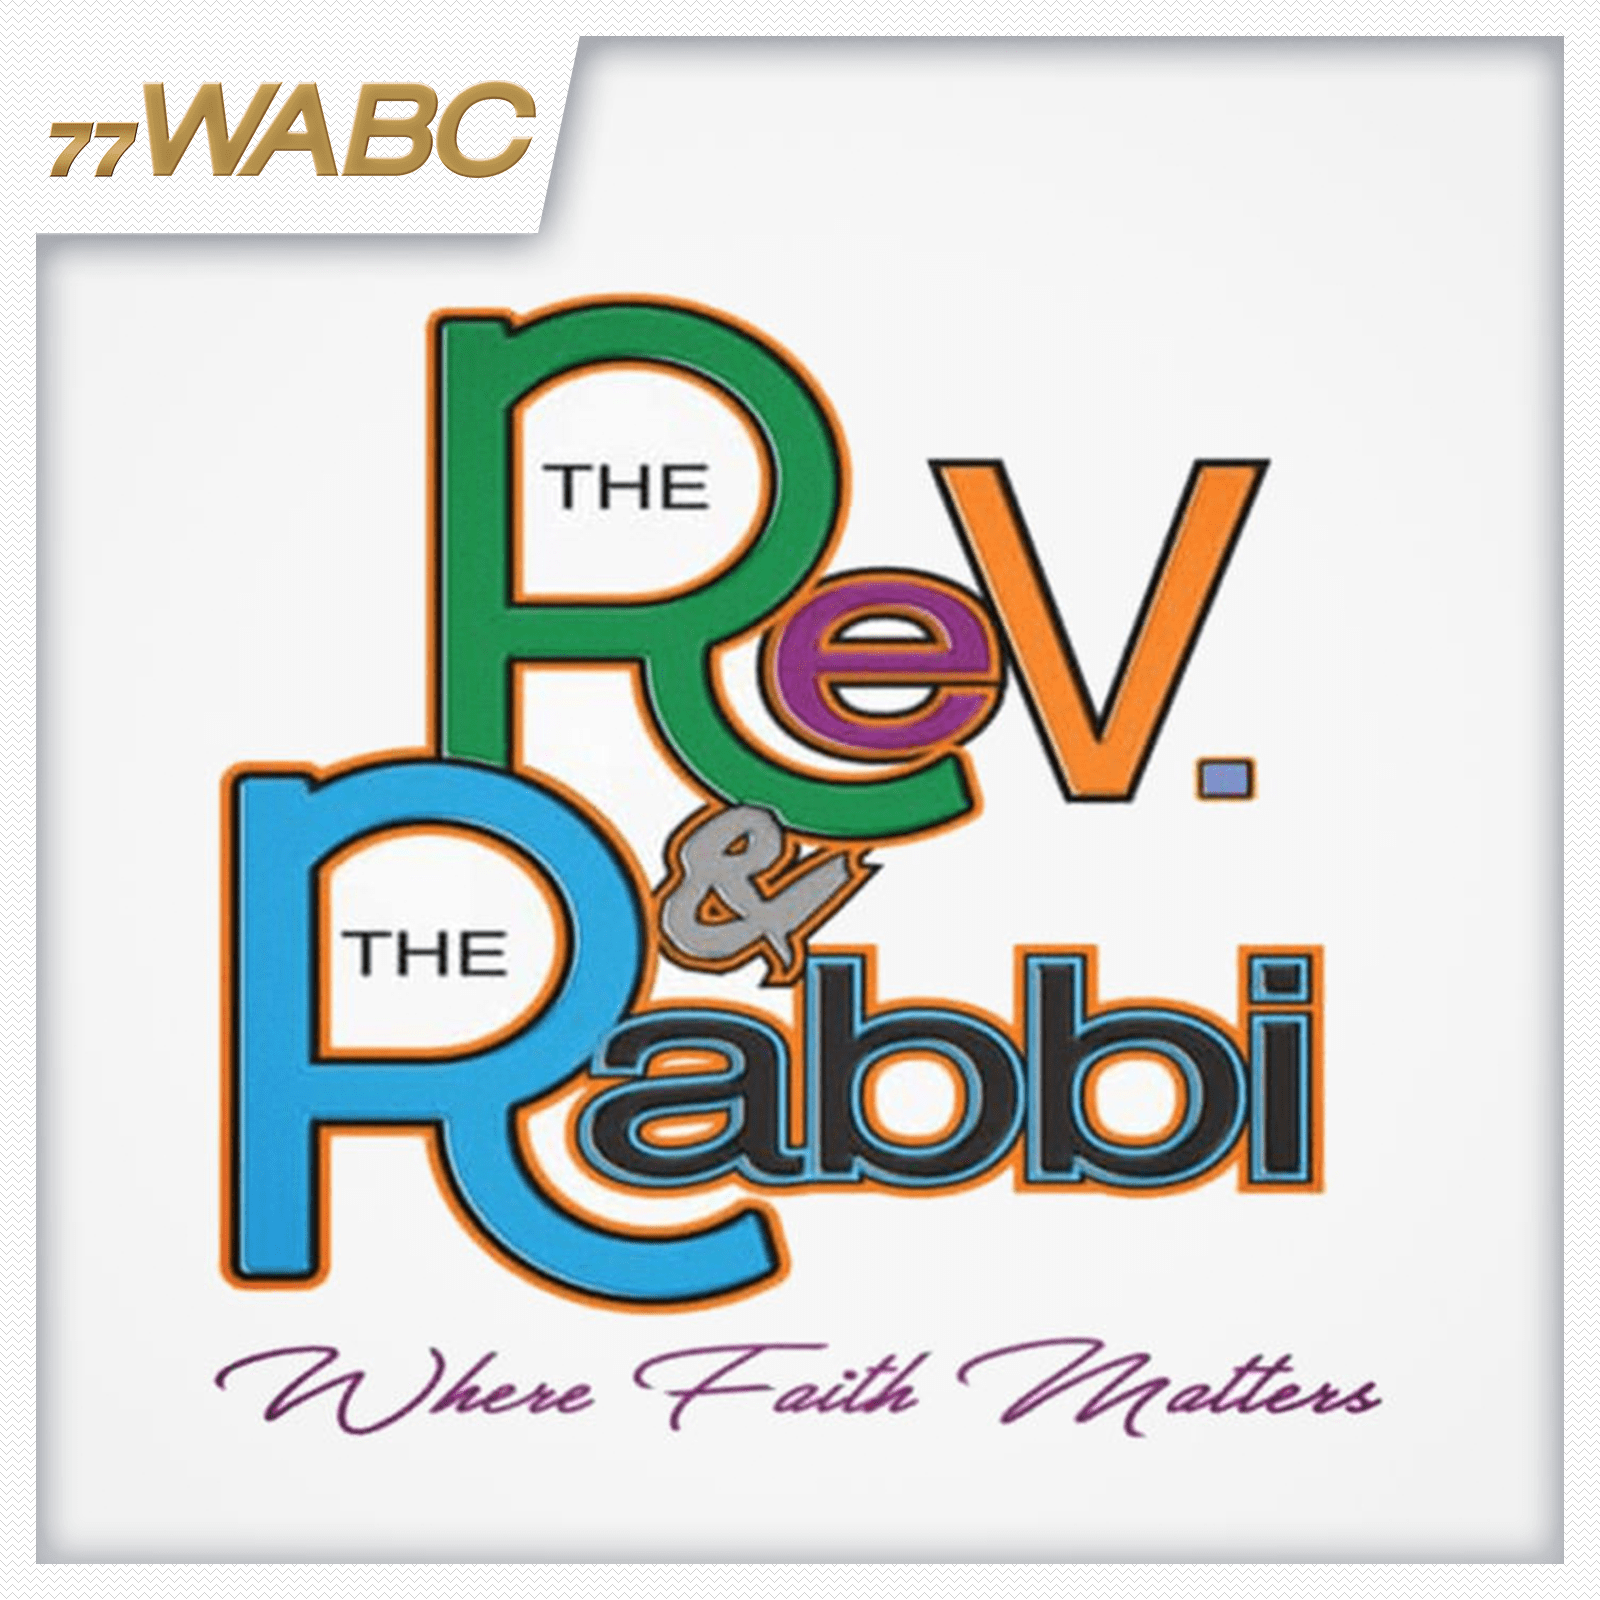 rev-and-the-rabbi-new-logo541316